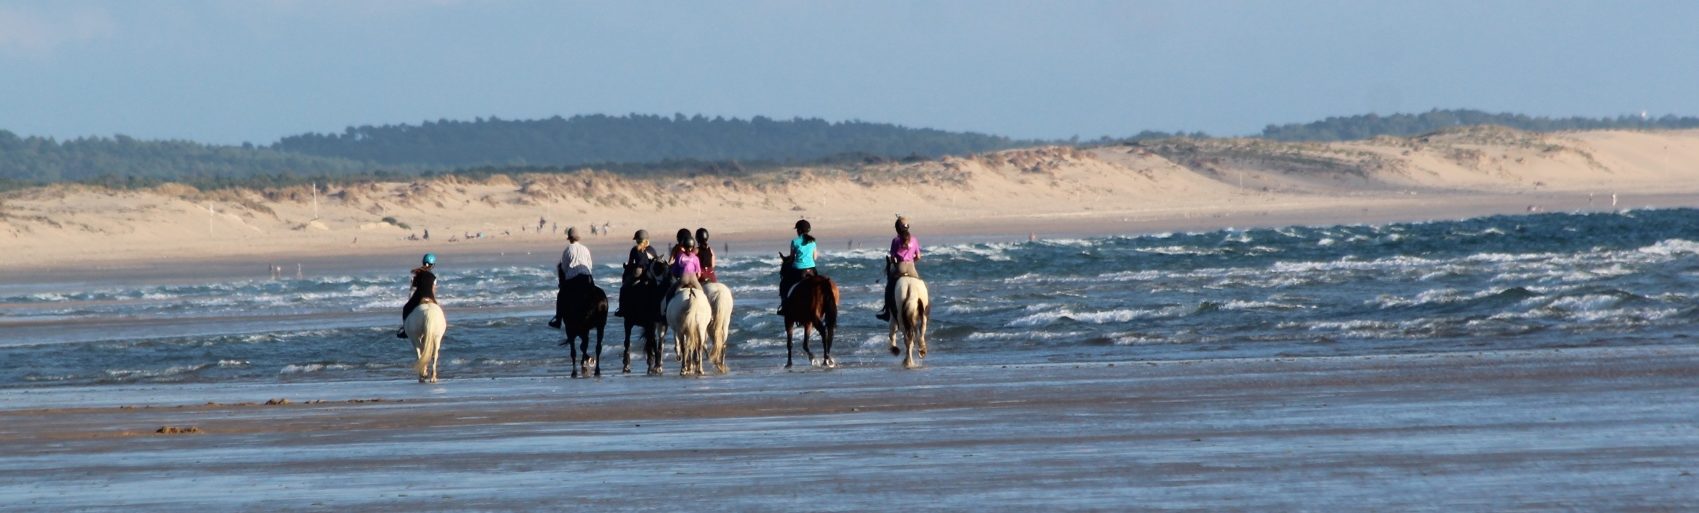 horse-riding-beach-atlantic-cognac